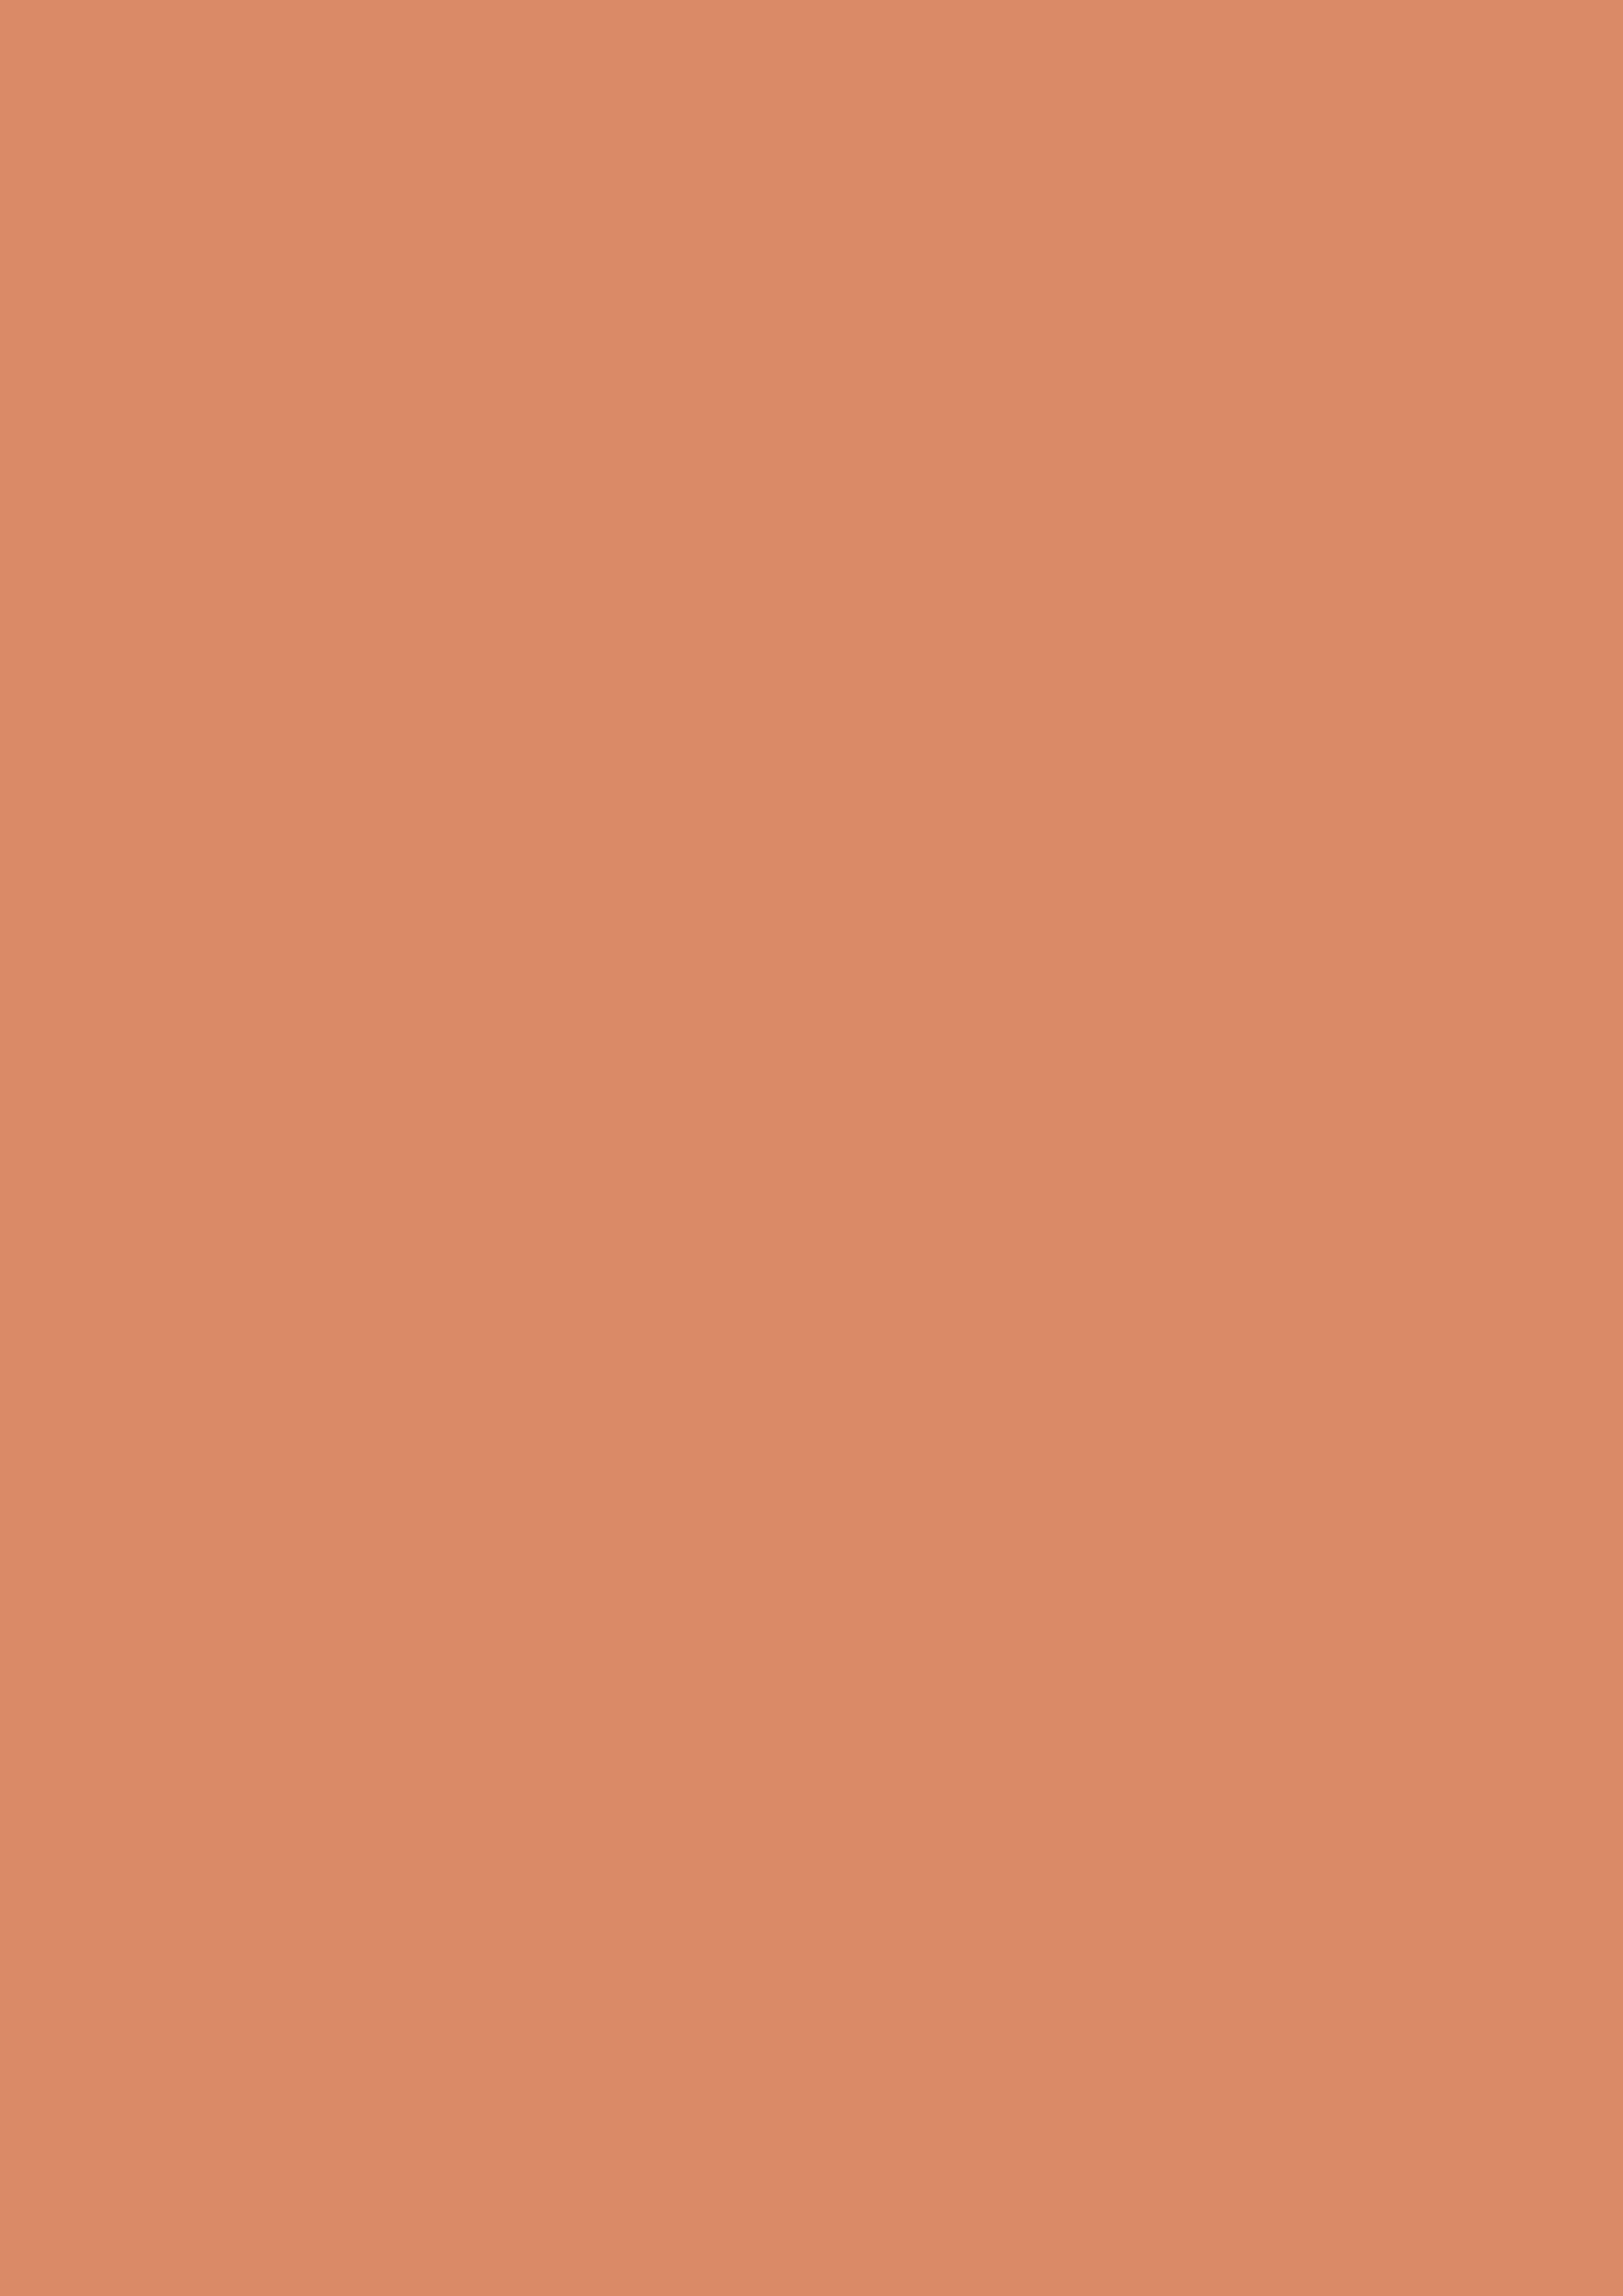 2480x3508 Copper Crayola Solid Color Background